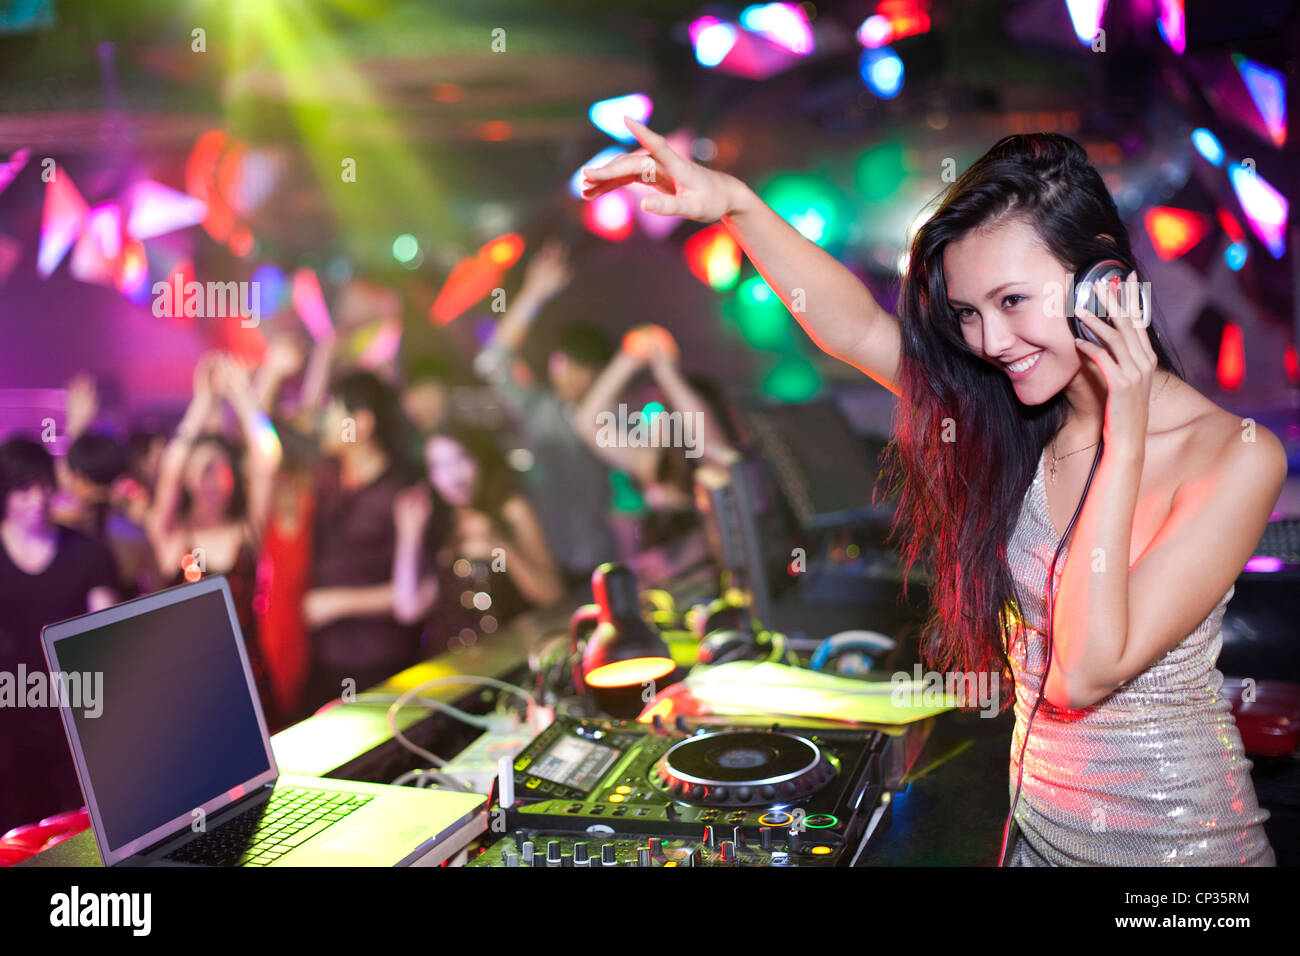 DJ doing record Scratching in nightclub Stock Photo - Alamy